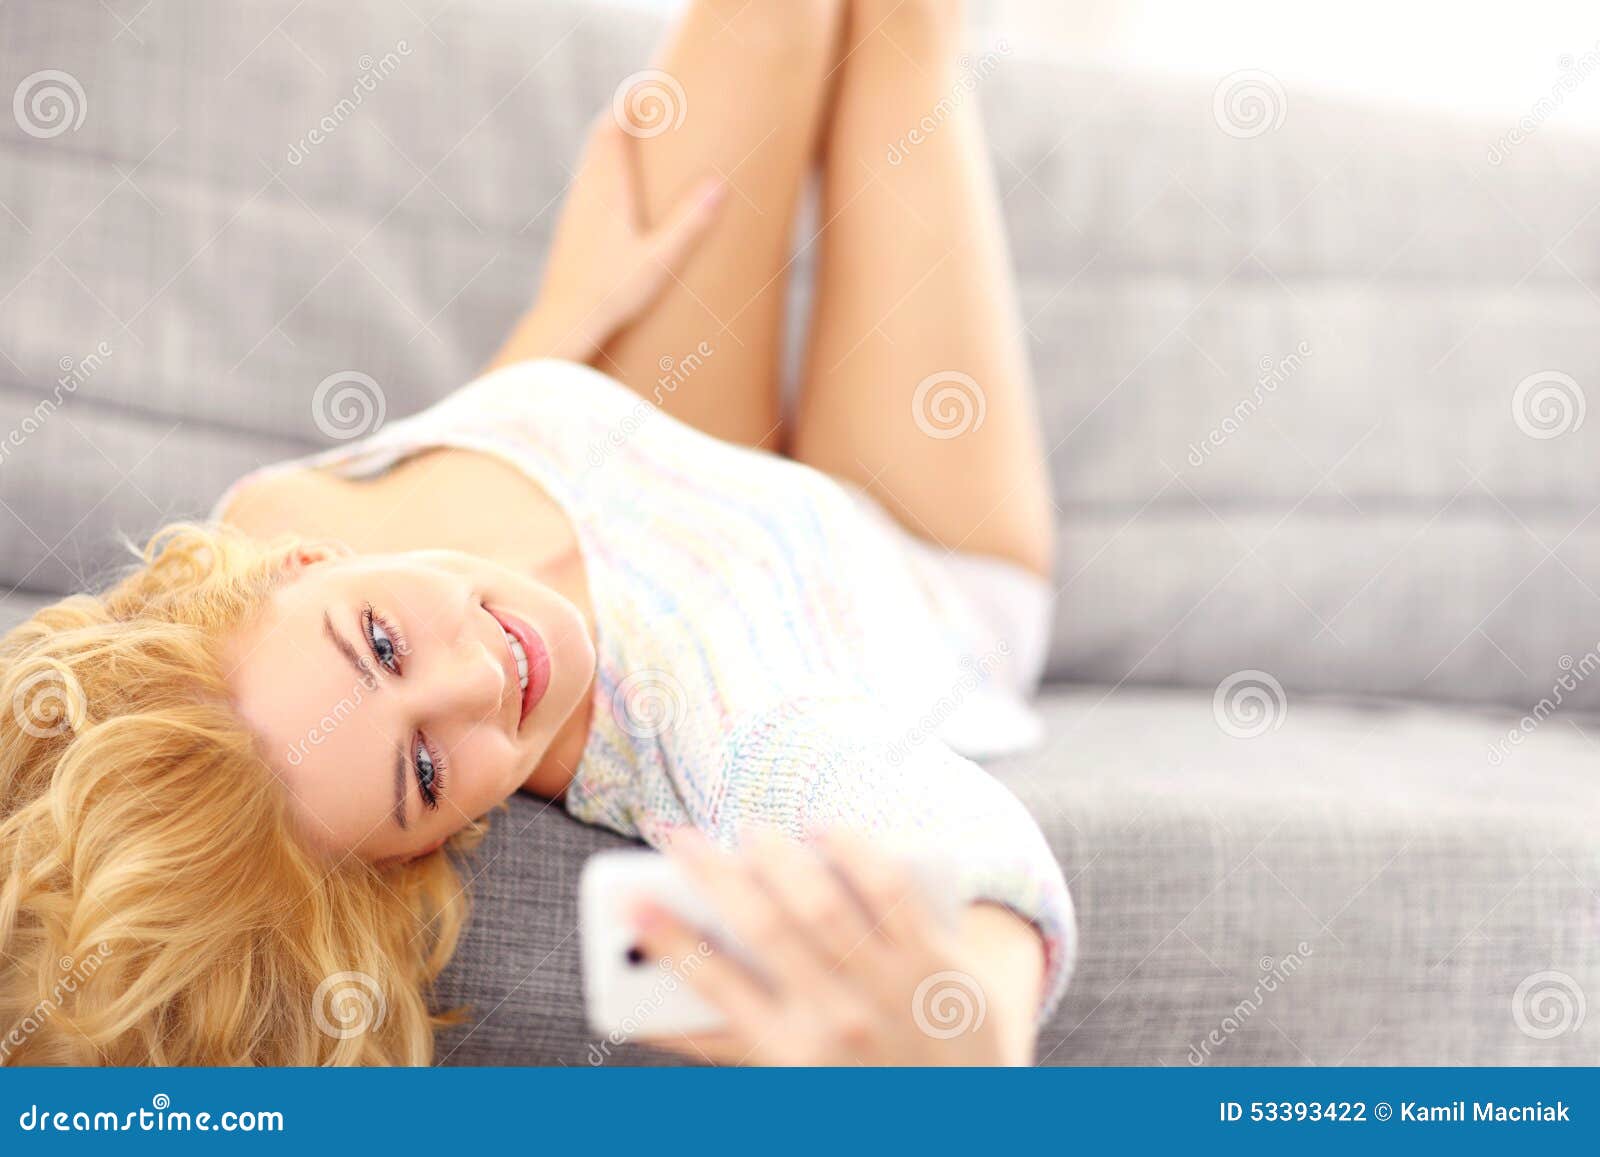 Woman Lying On Sofa And Taking Selfie Stock Photo Image Of Lying